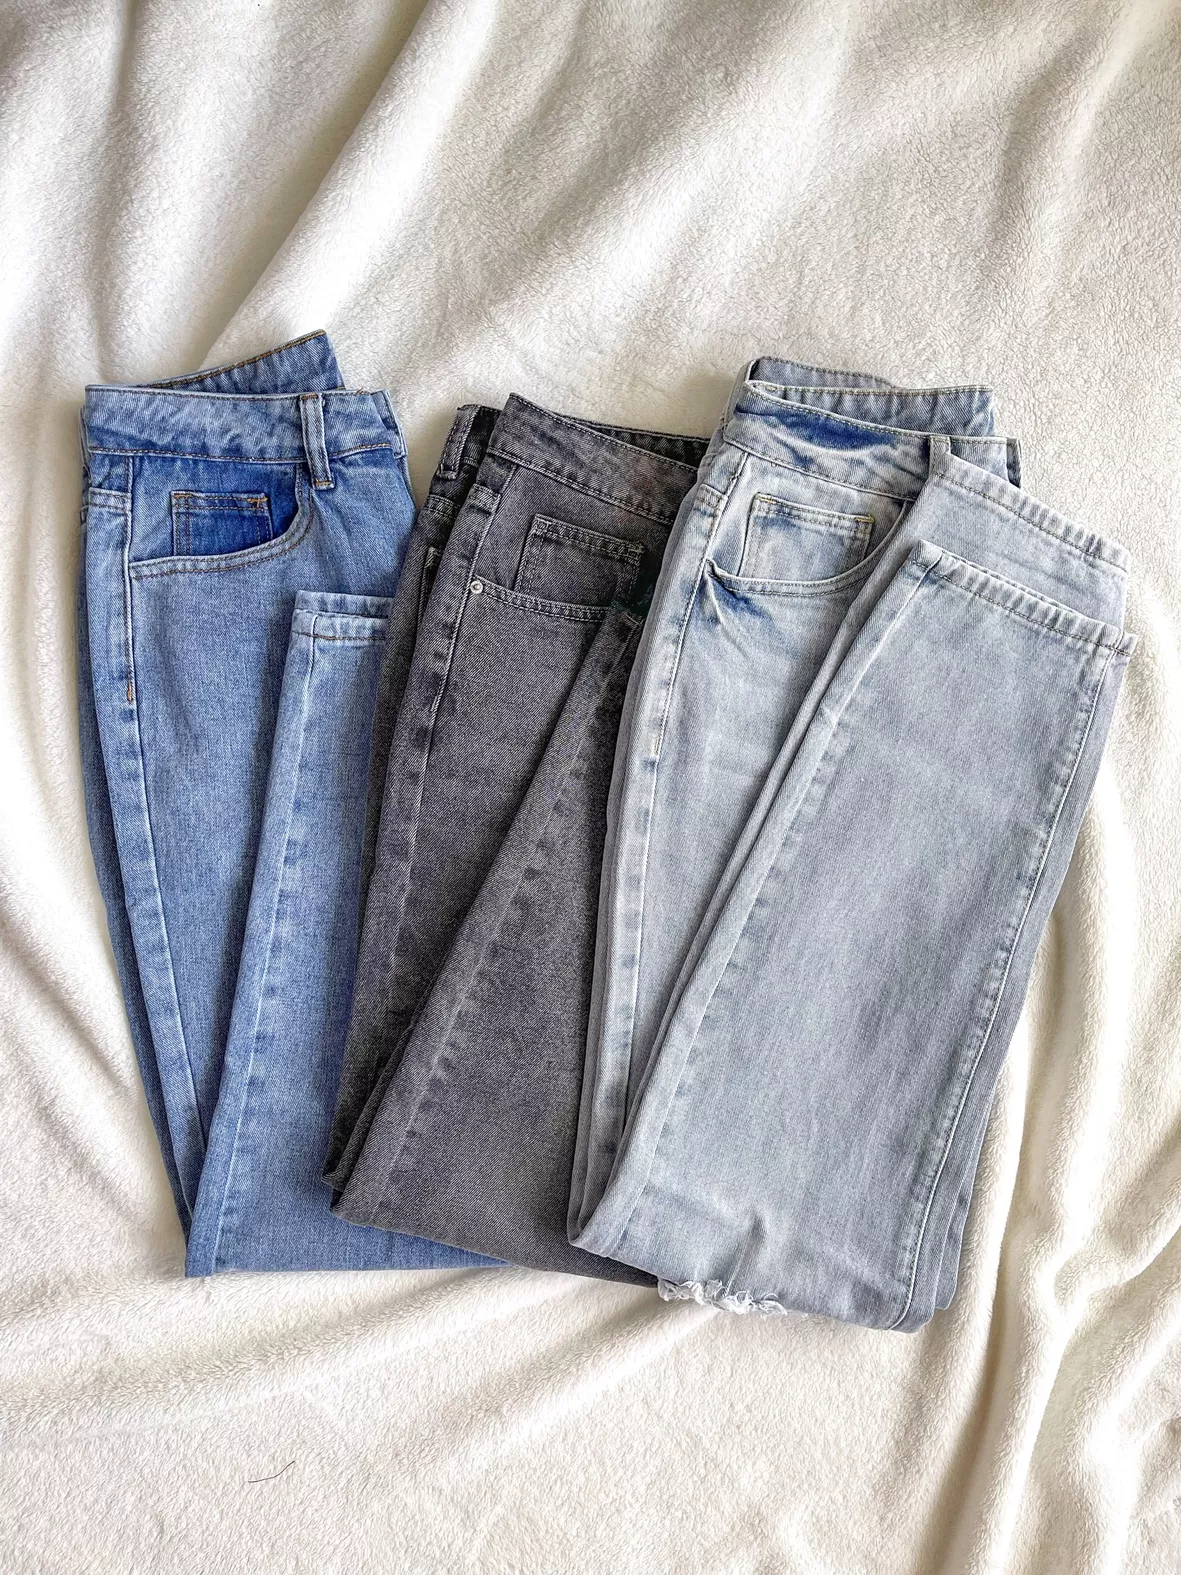 Risen Rhinestone Pocket Jeans curated on LTK